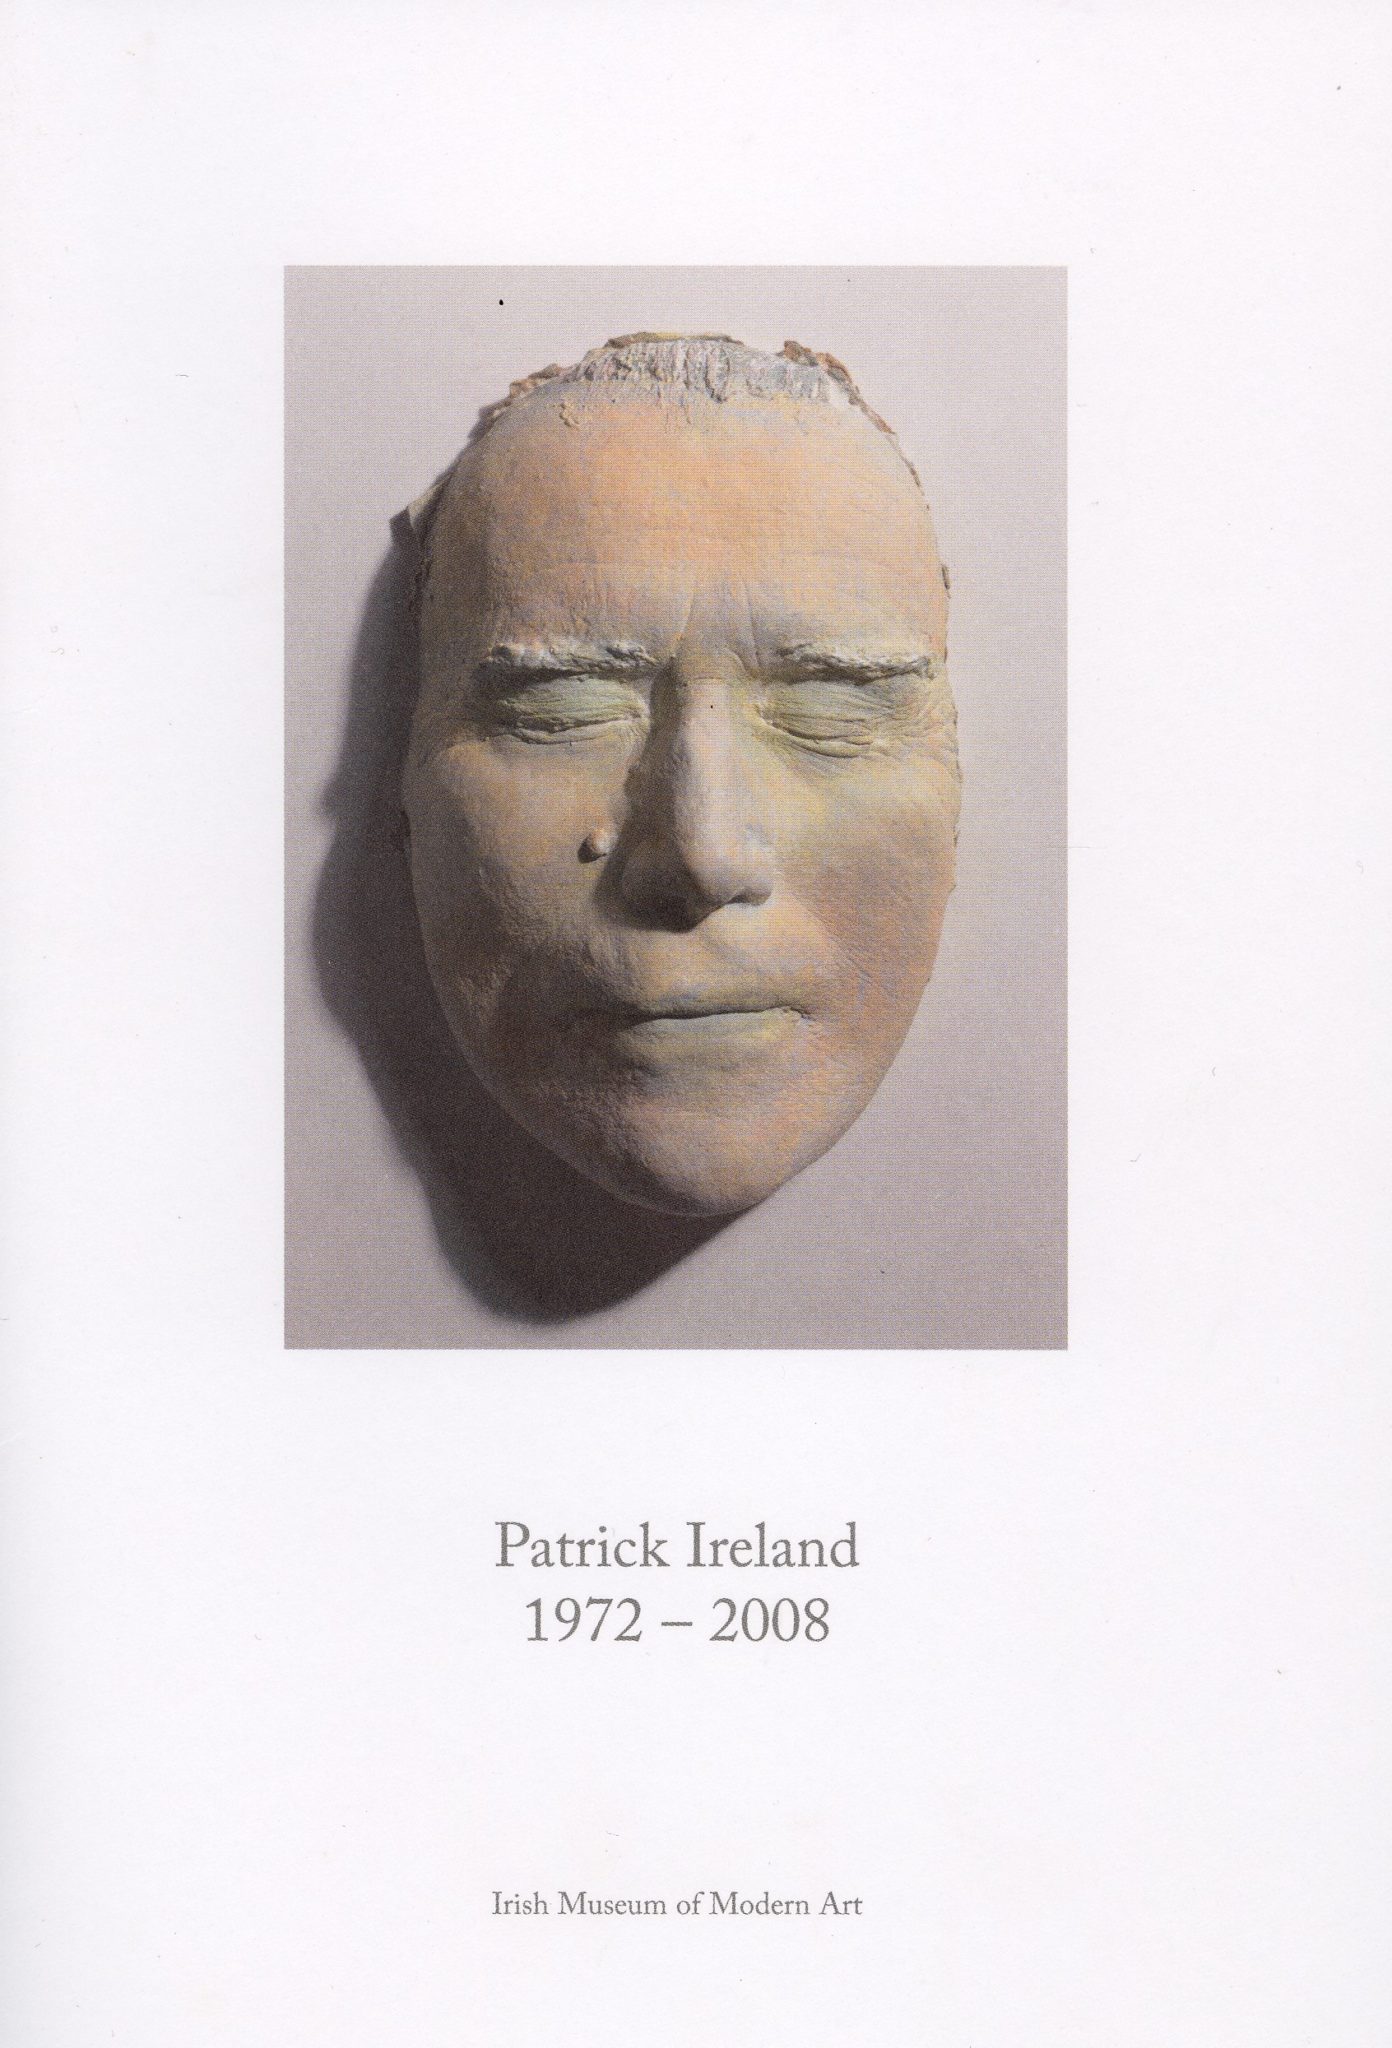 Lament for Patrick Ireland